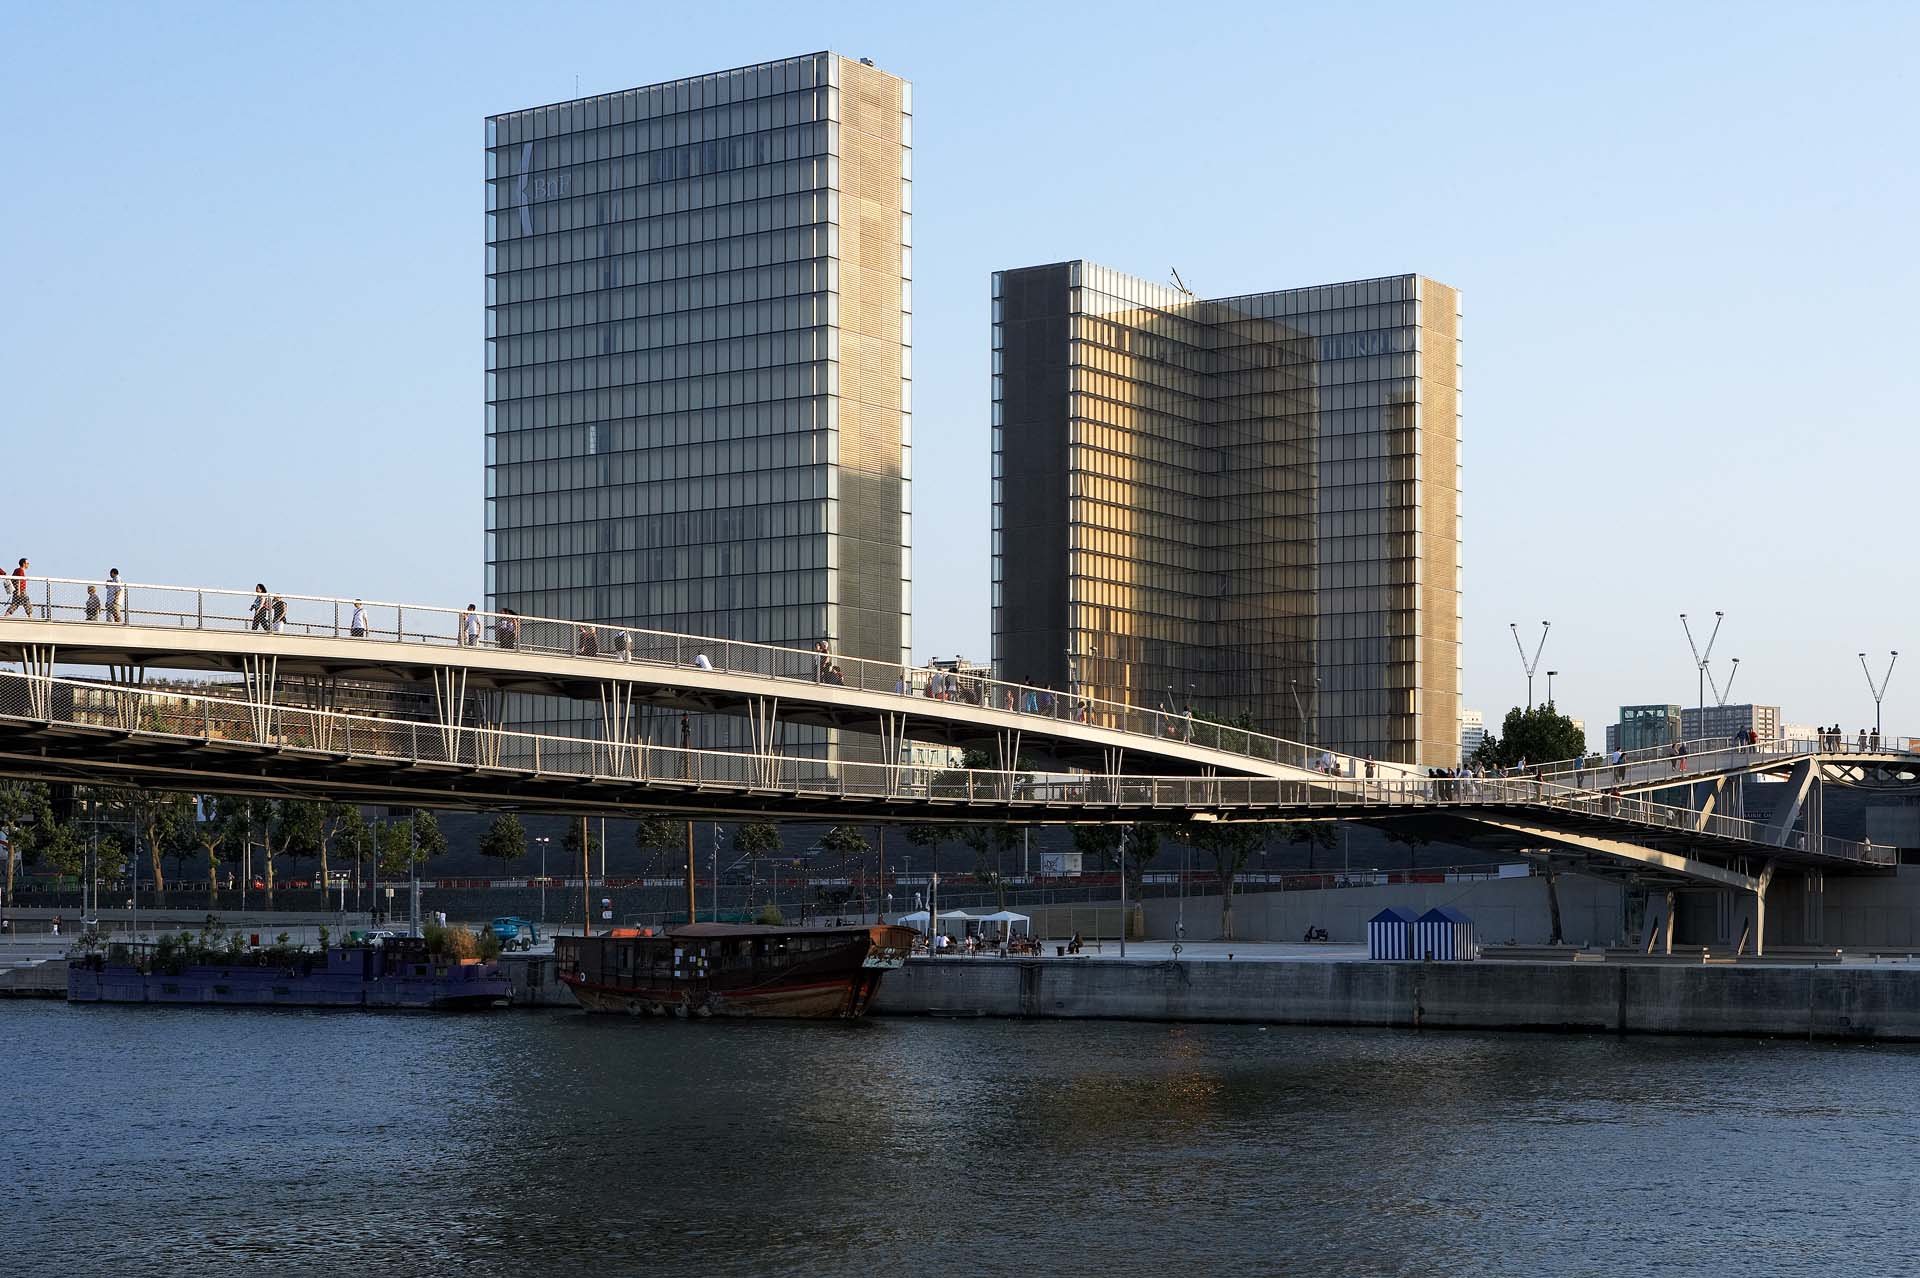 Webnet railing, pedestrian bridge, Paris